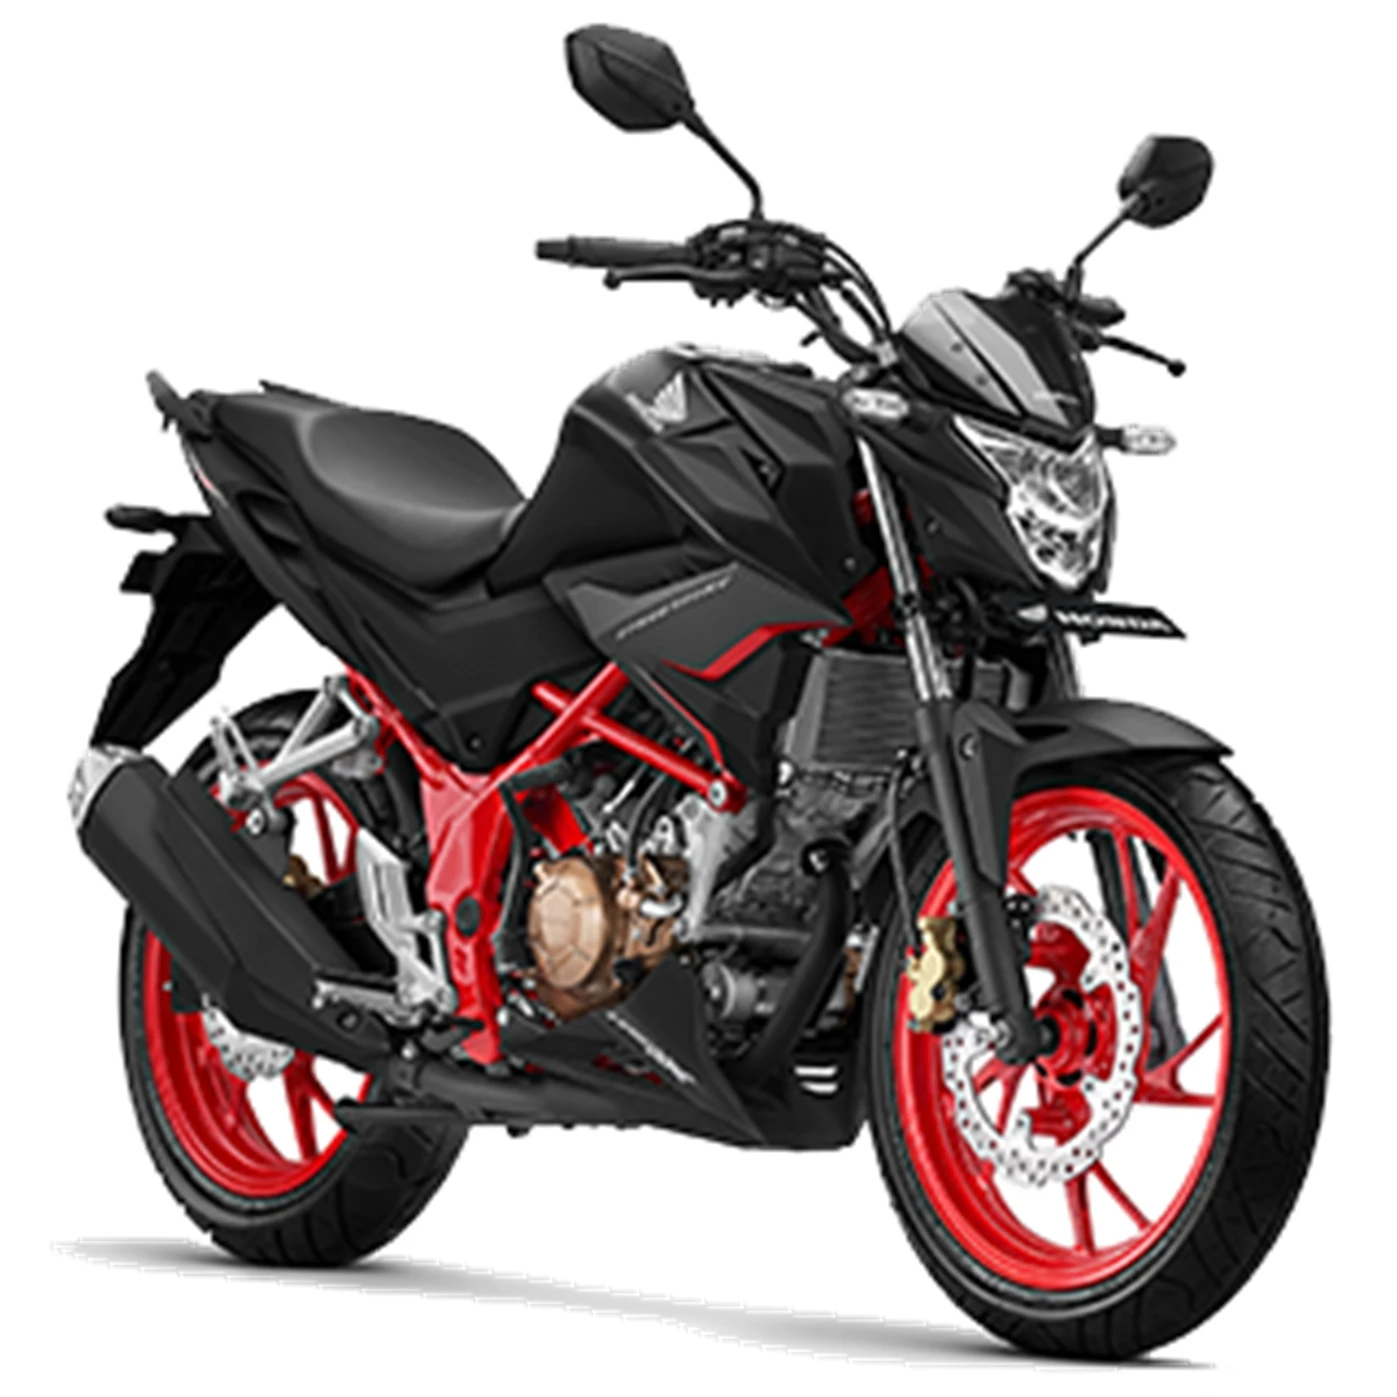 Brand New Indonesia Honda All New Cb150r Street Motorcycle - Buy Honda